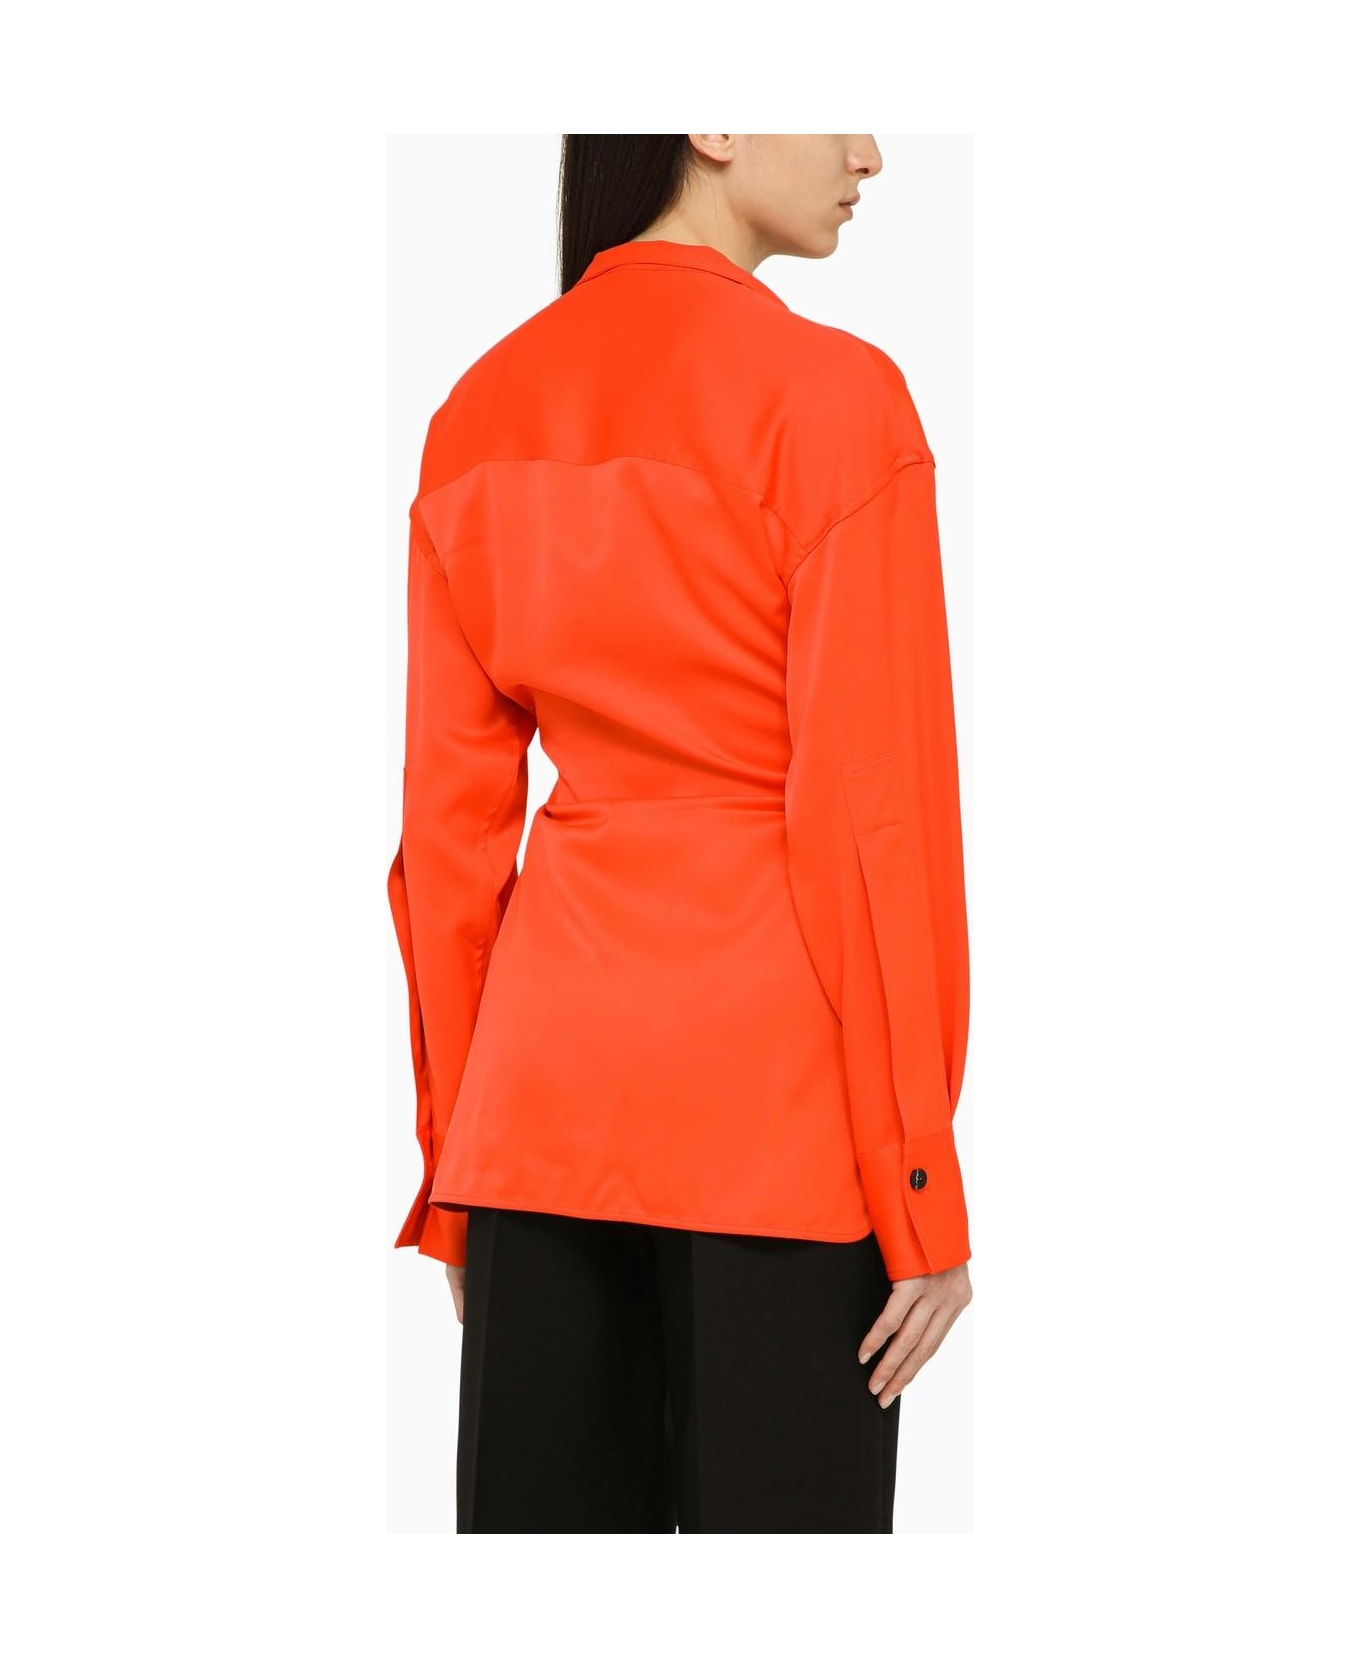 Ferragamo Shirt With Asymmetrical Closure Orange - Orange シャツ